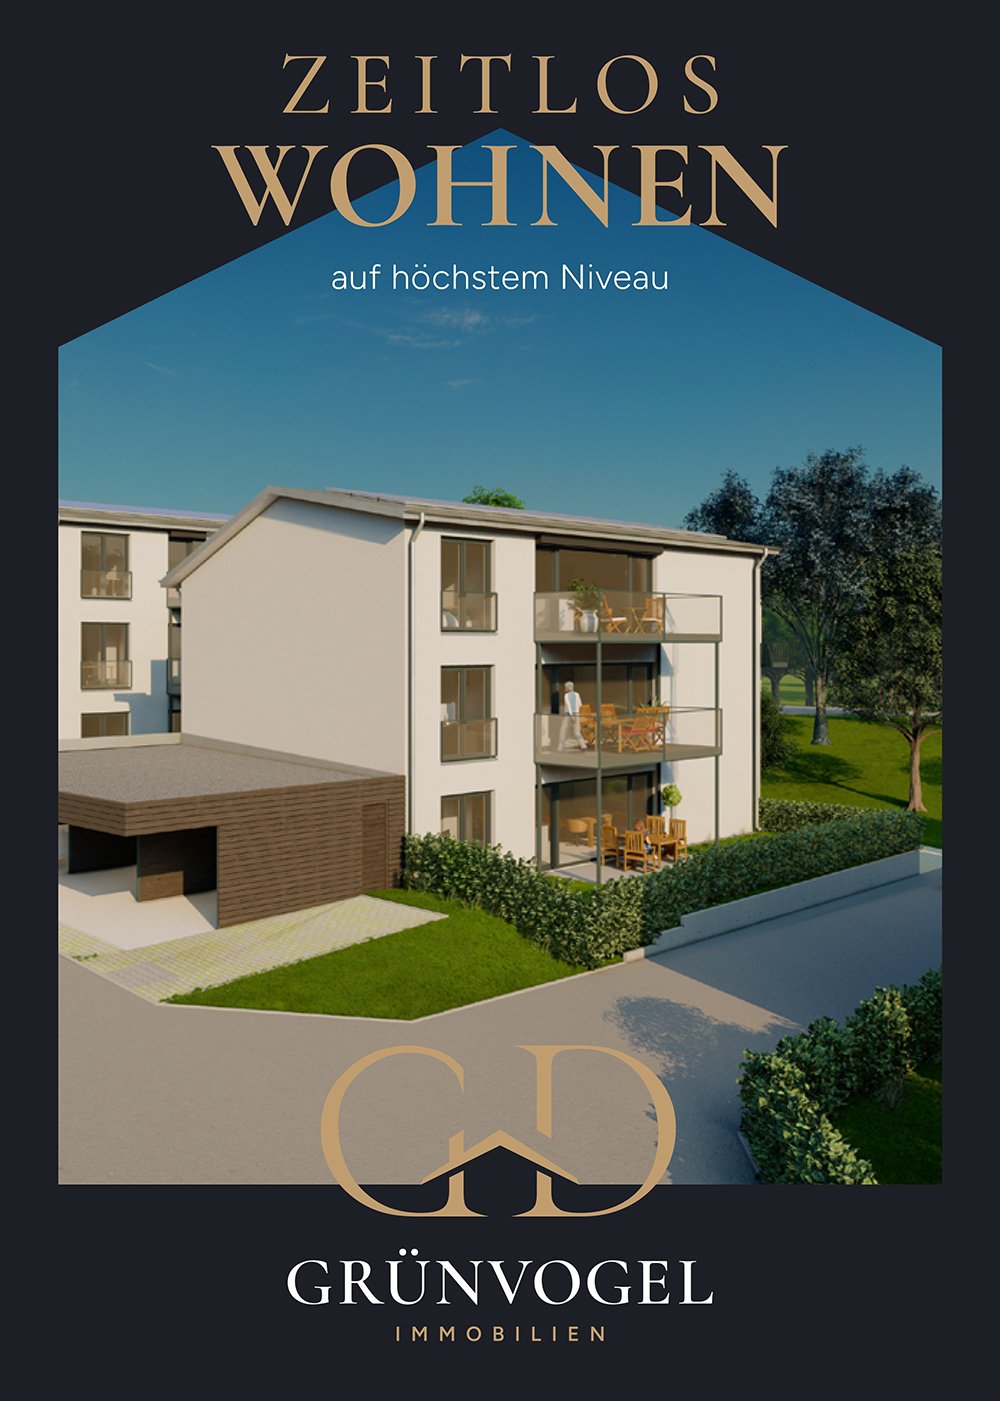 Image new build property K11 Owingen